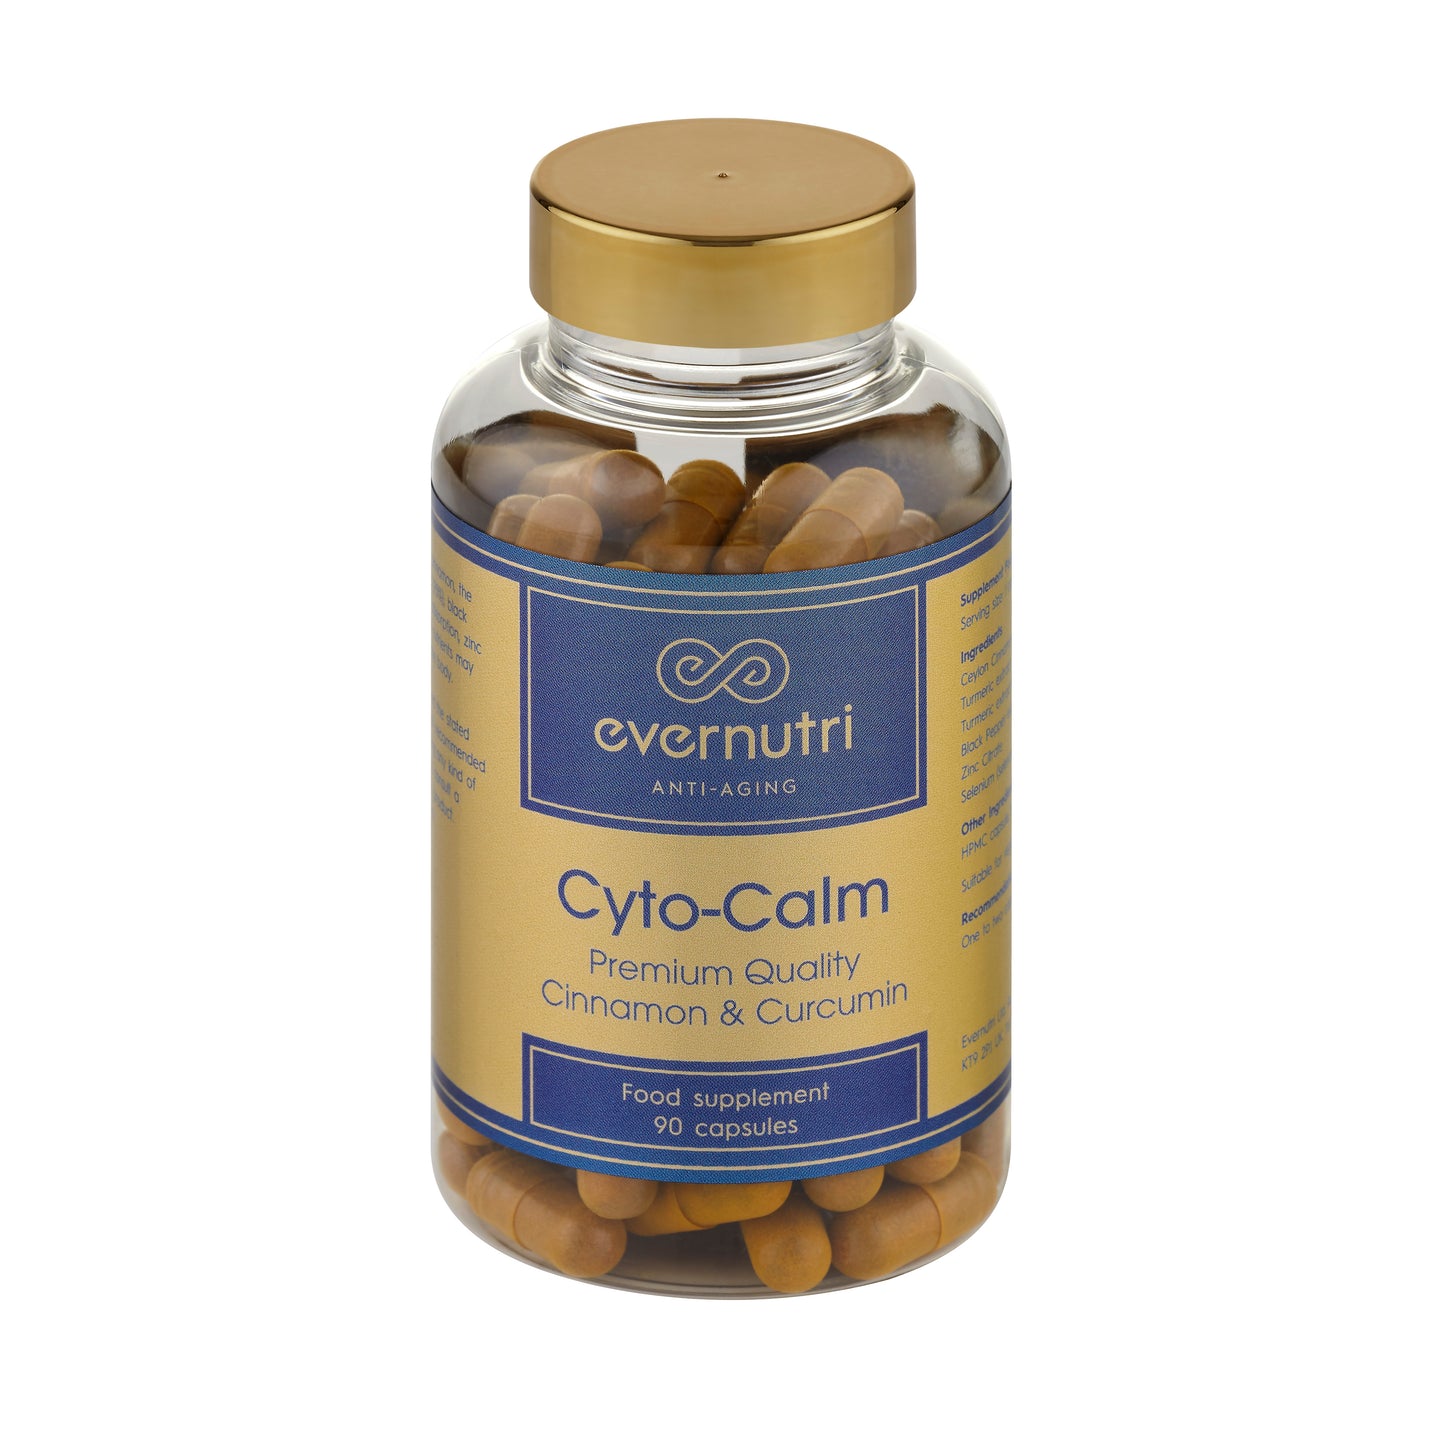 Cyto-Calm (Cinnamon & Curcumin)